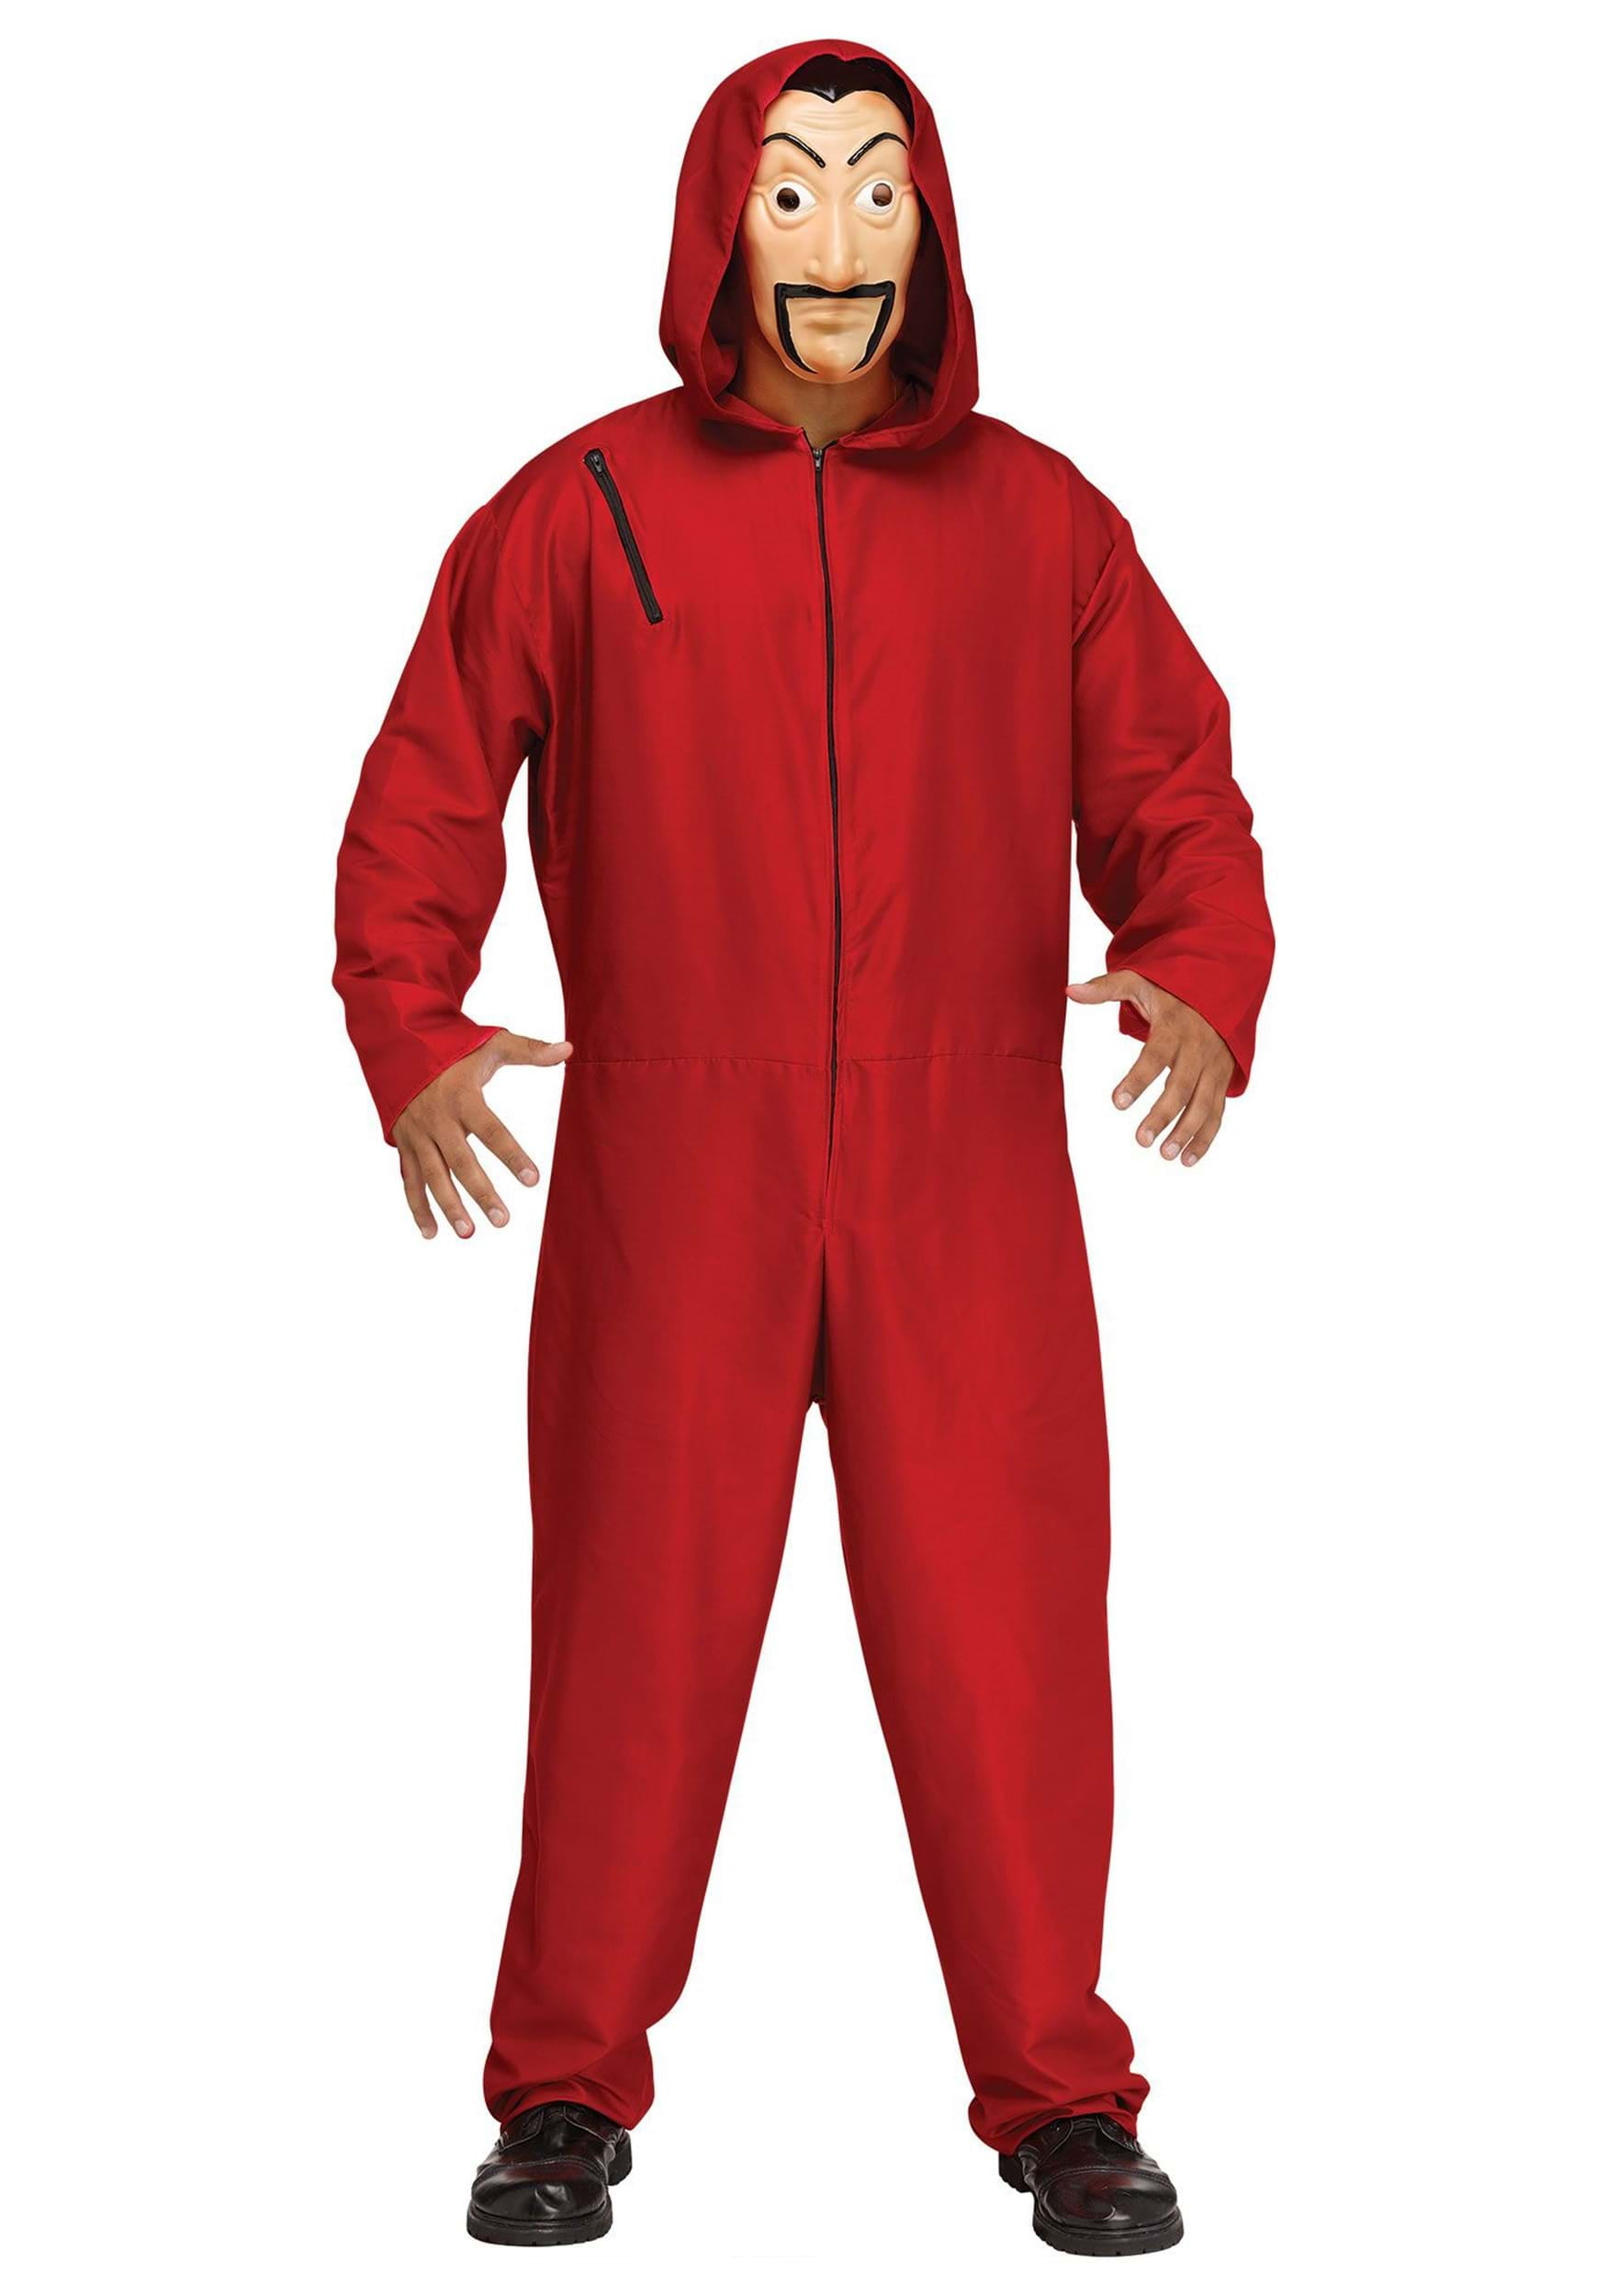 Adult Red Bank Robber Costume - Walmart.com